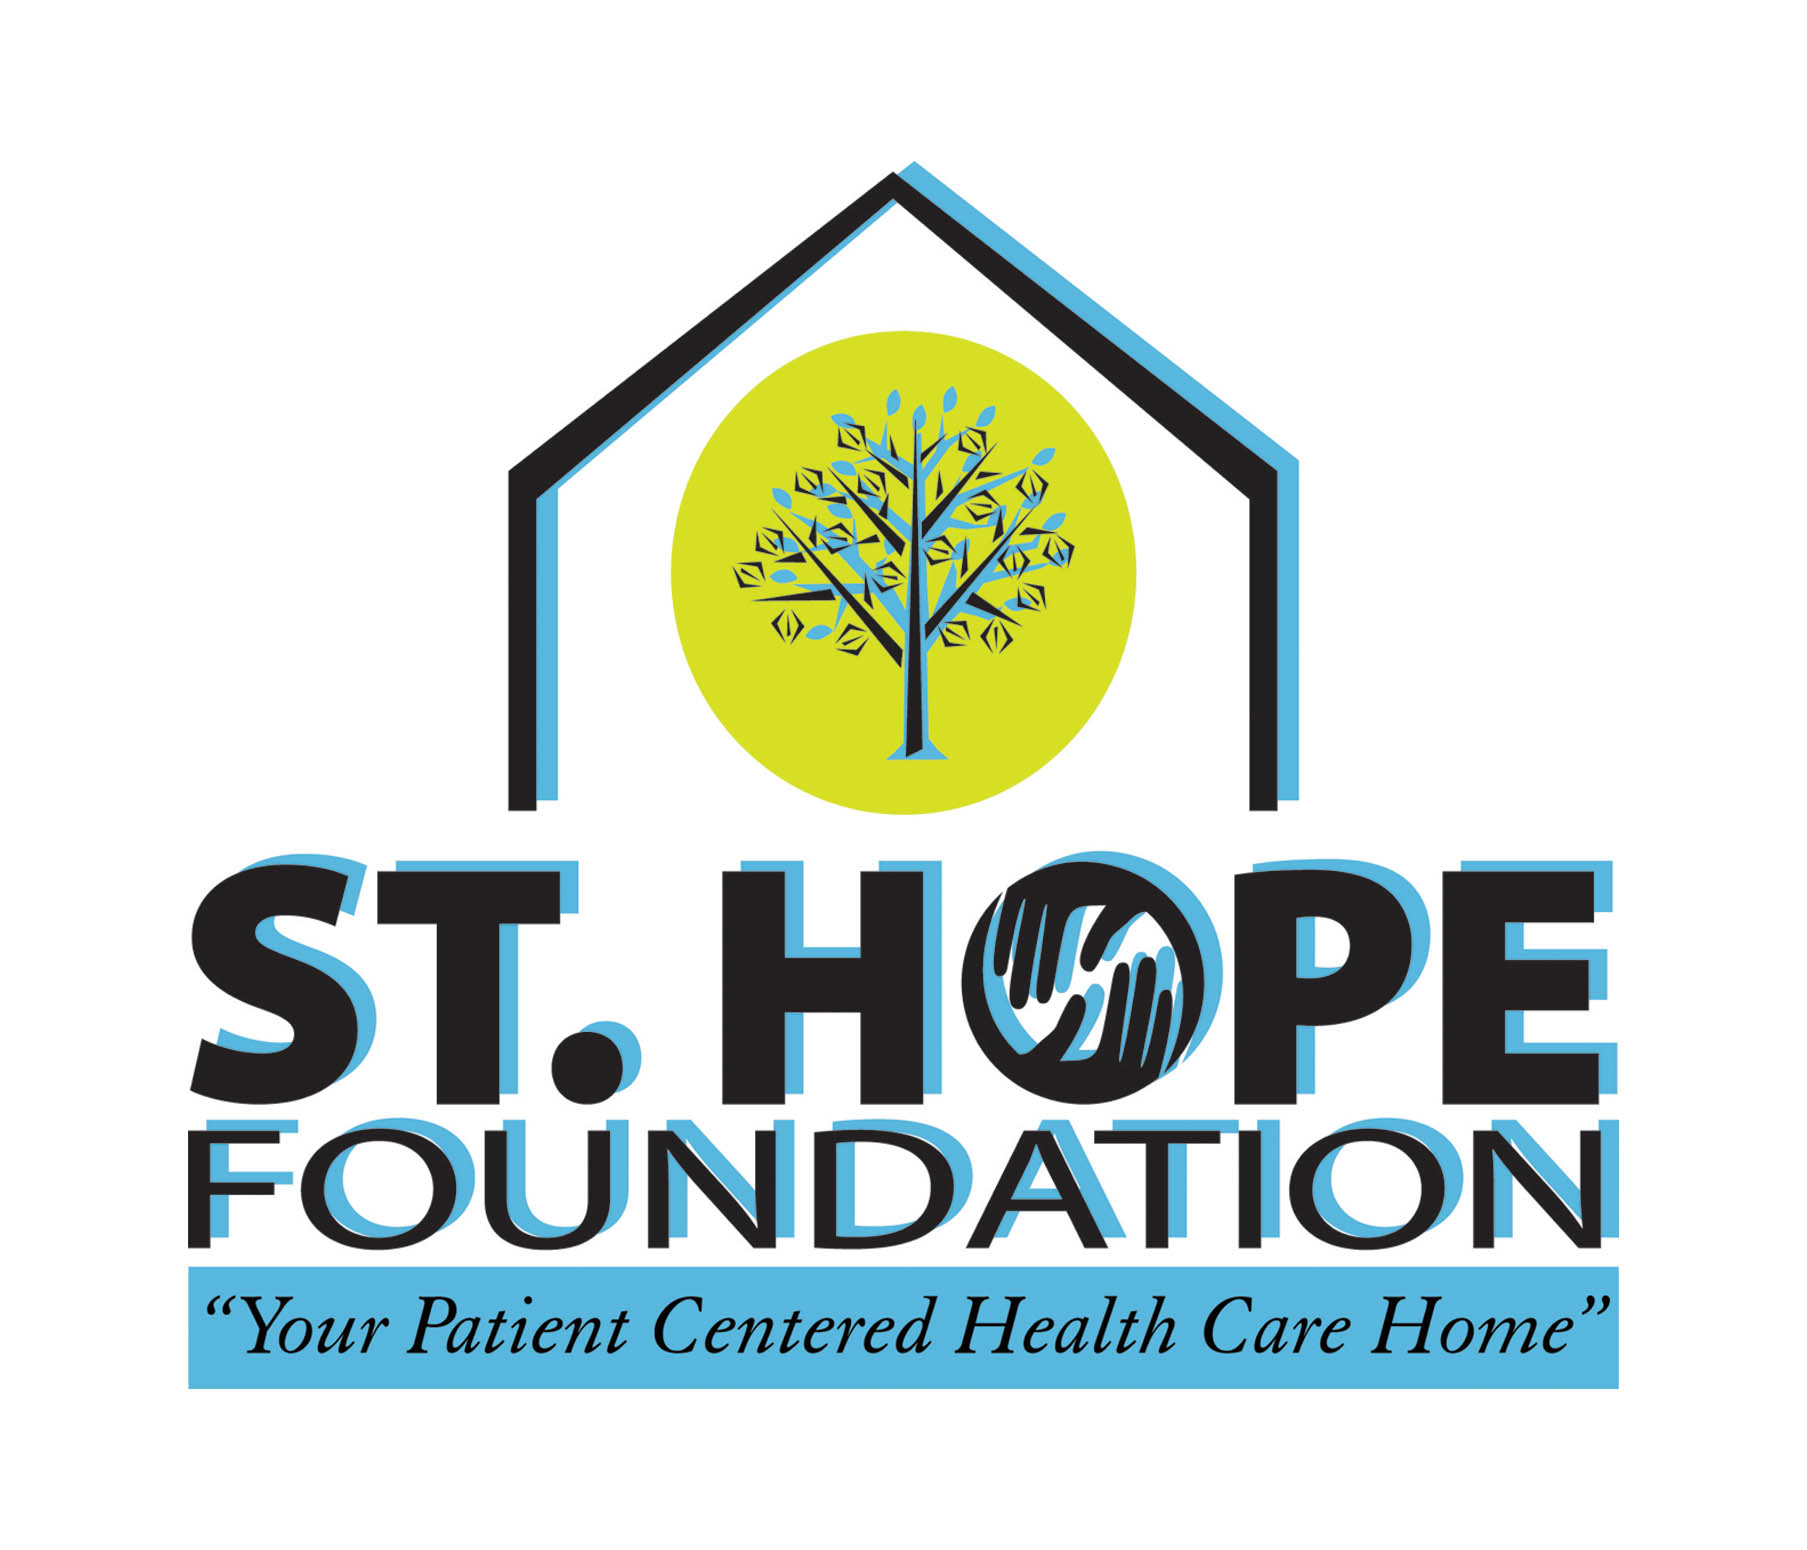 St Hope Foundation Company Logo